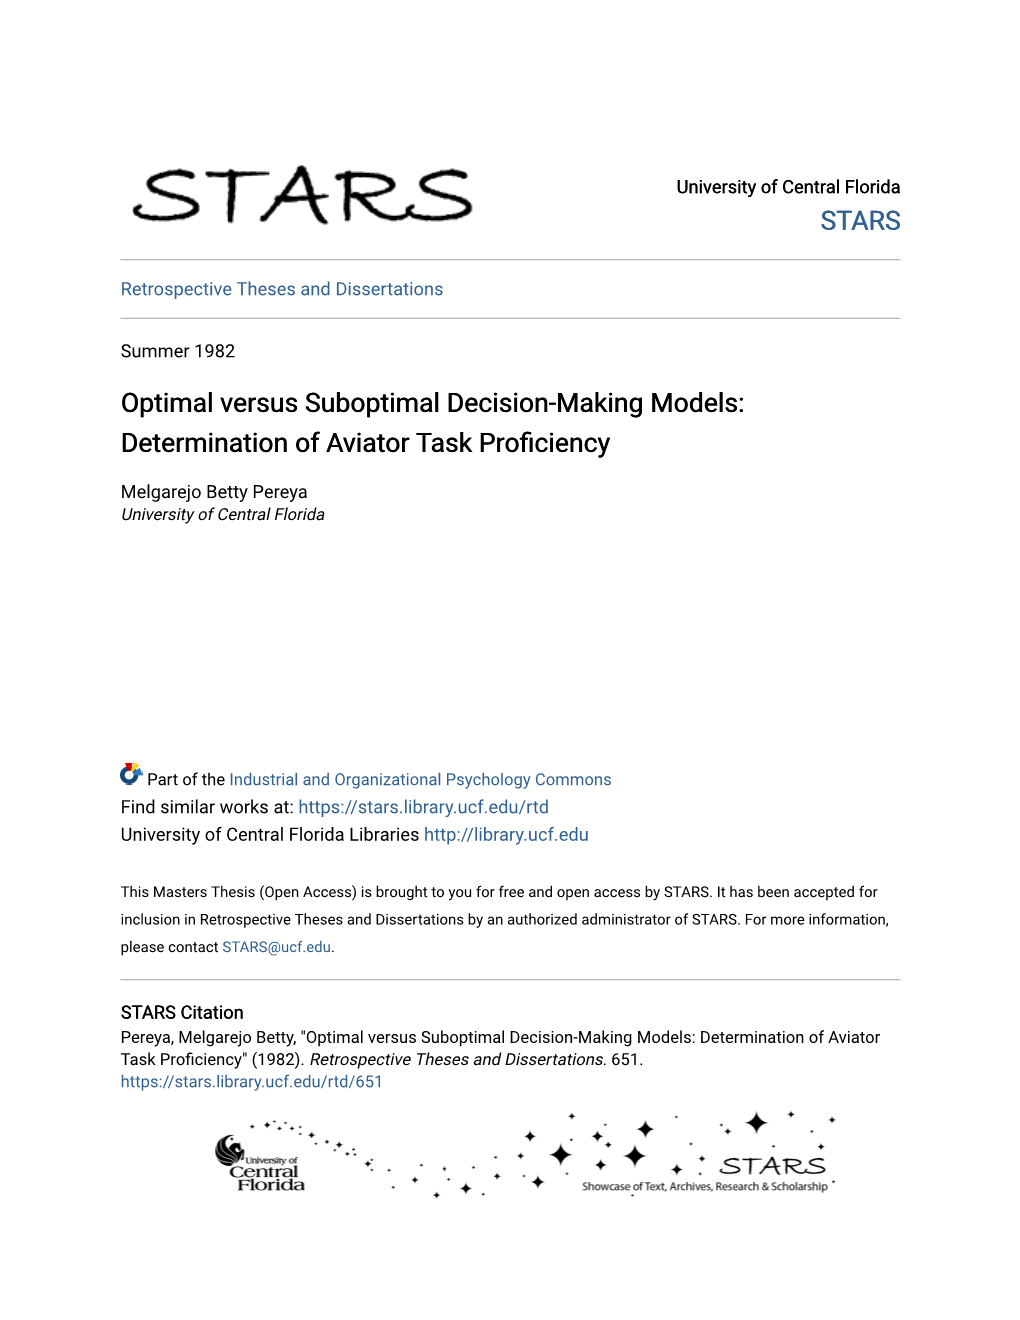 Optimal Versus Suboptimal Decision-Making Models: Determination of Aviator Task Proficiency